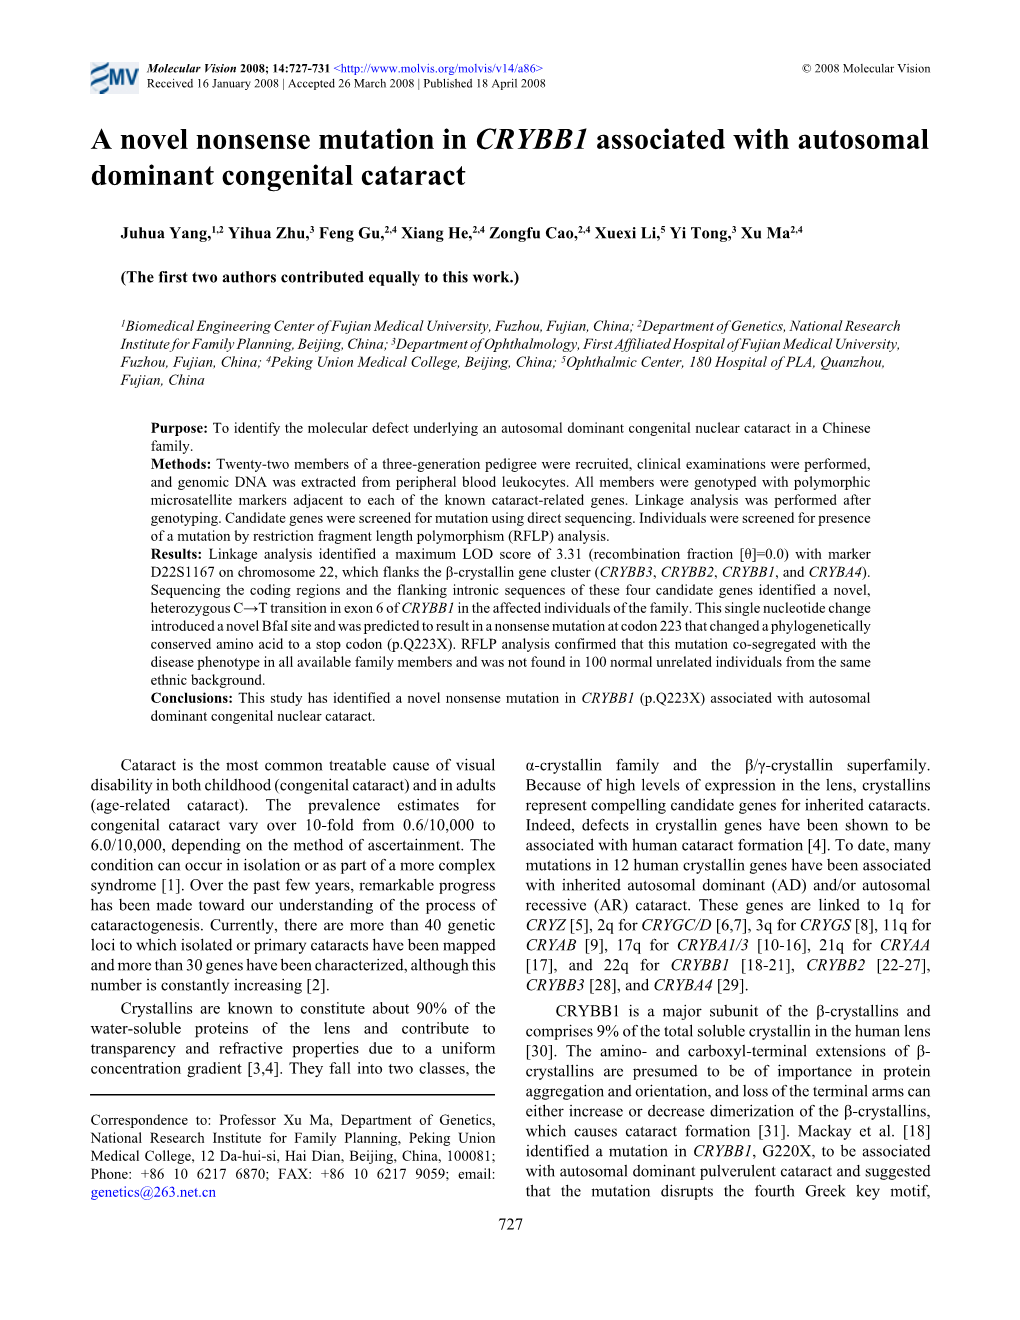 A Novel Nonsense Mutation in CRYBB1 Associated with Autosomal Dominant Congenital Cataract